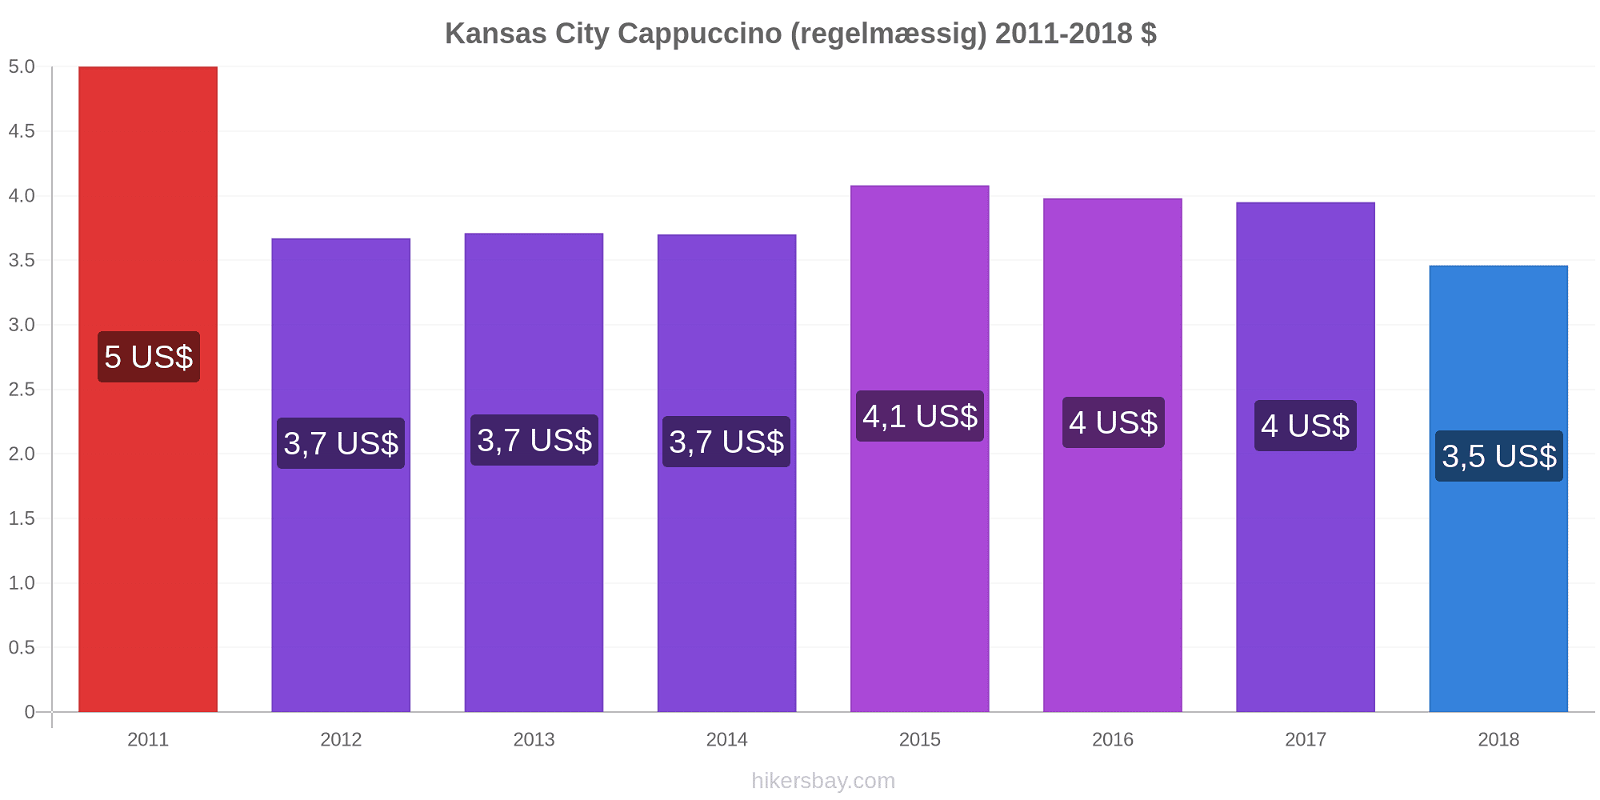 Kansas City prisændringer Cappuccino (regelmæssig) hikersbay.com